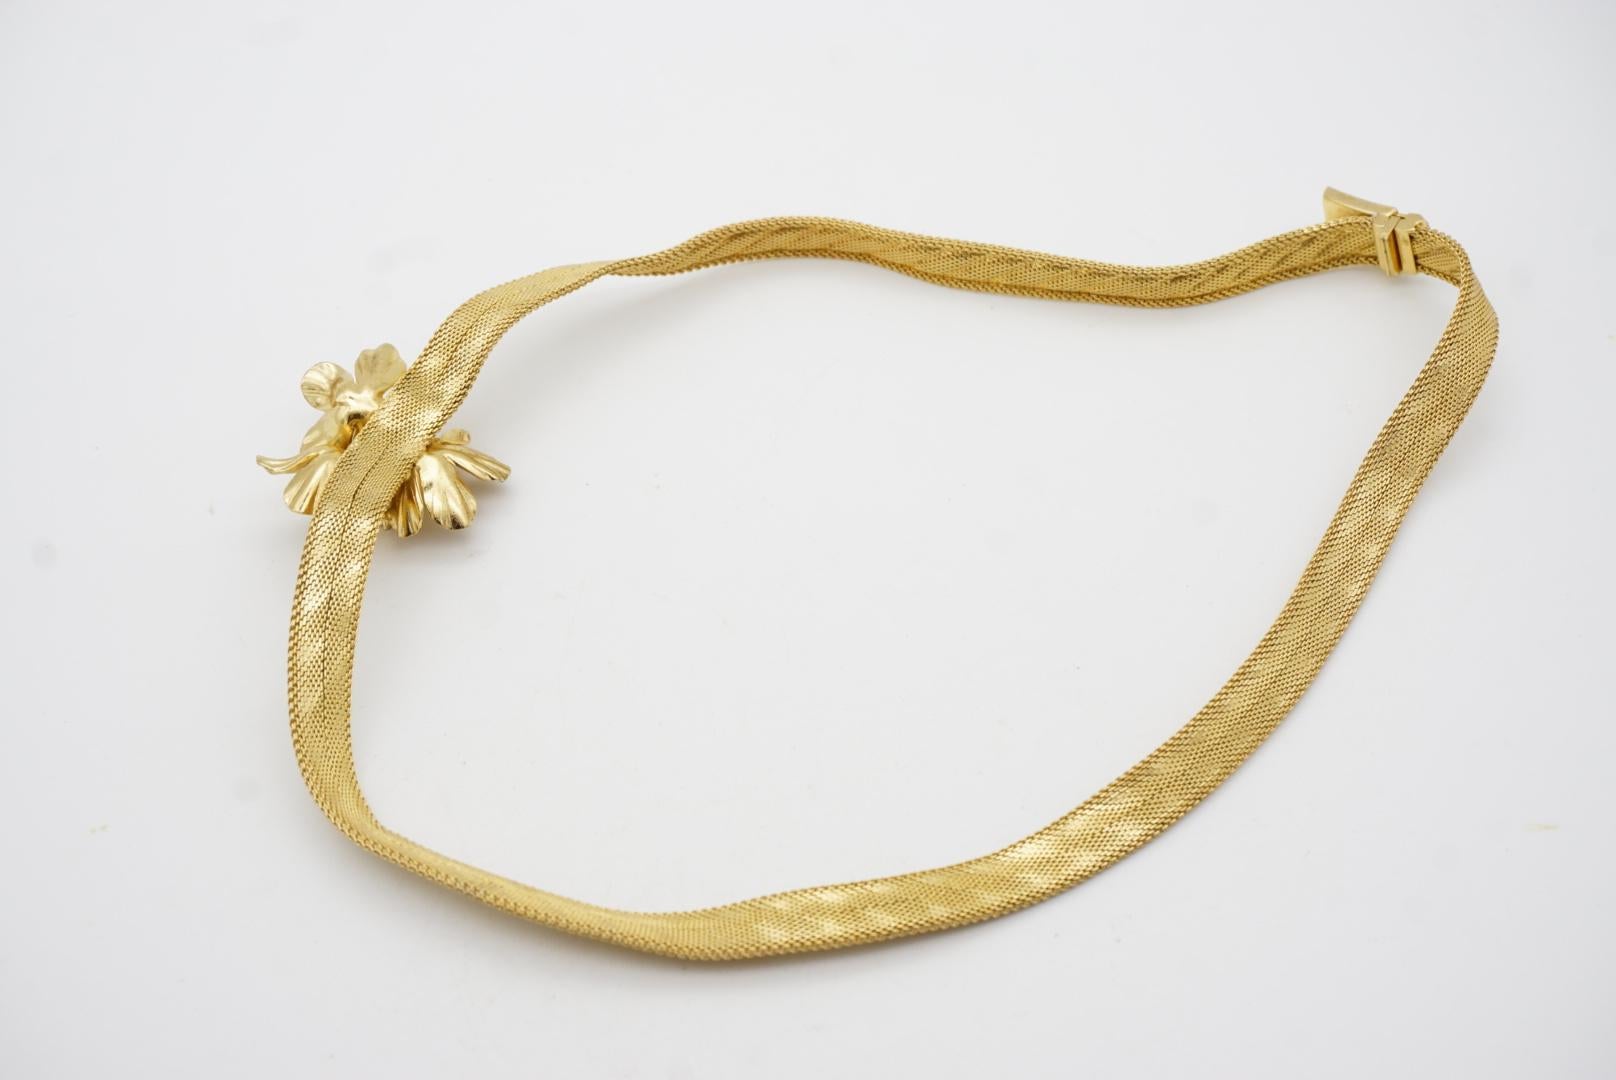 Christian Dior GROSSE 1967 Vintage Trio Cluster Flower Pearls Choker Necklace For Sale 11